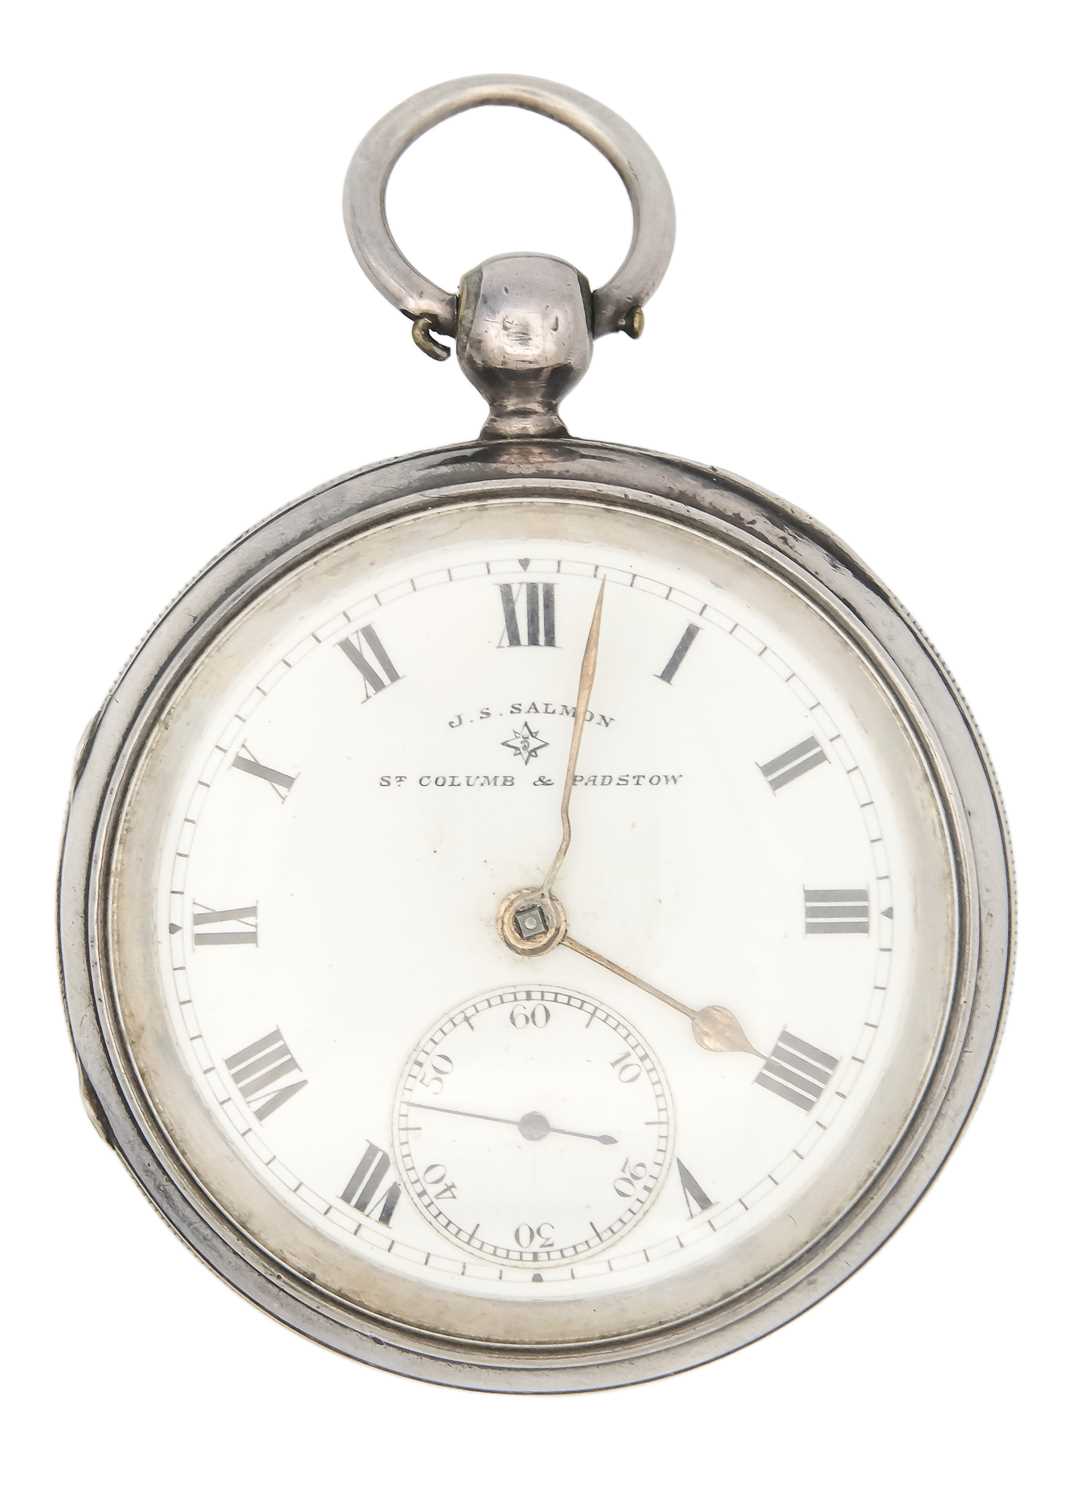 A silver-cased key wind pocket lever watch.